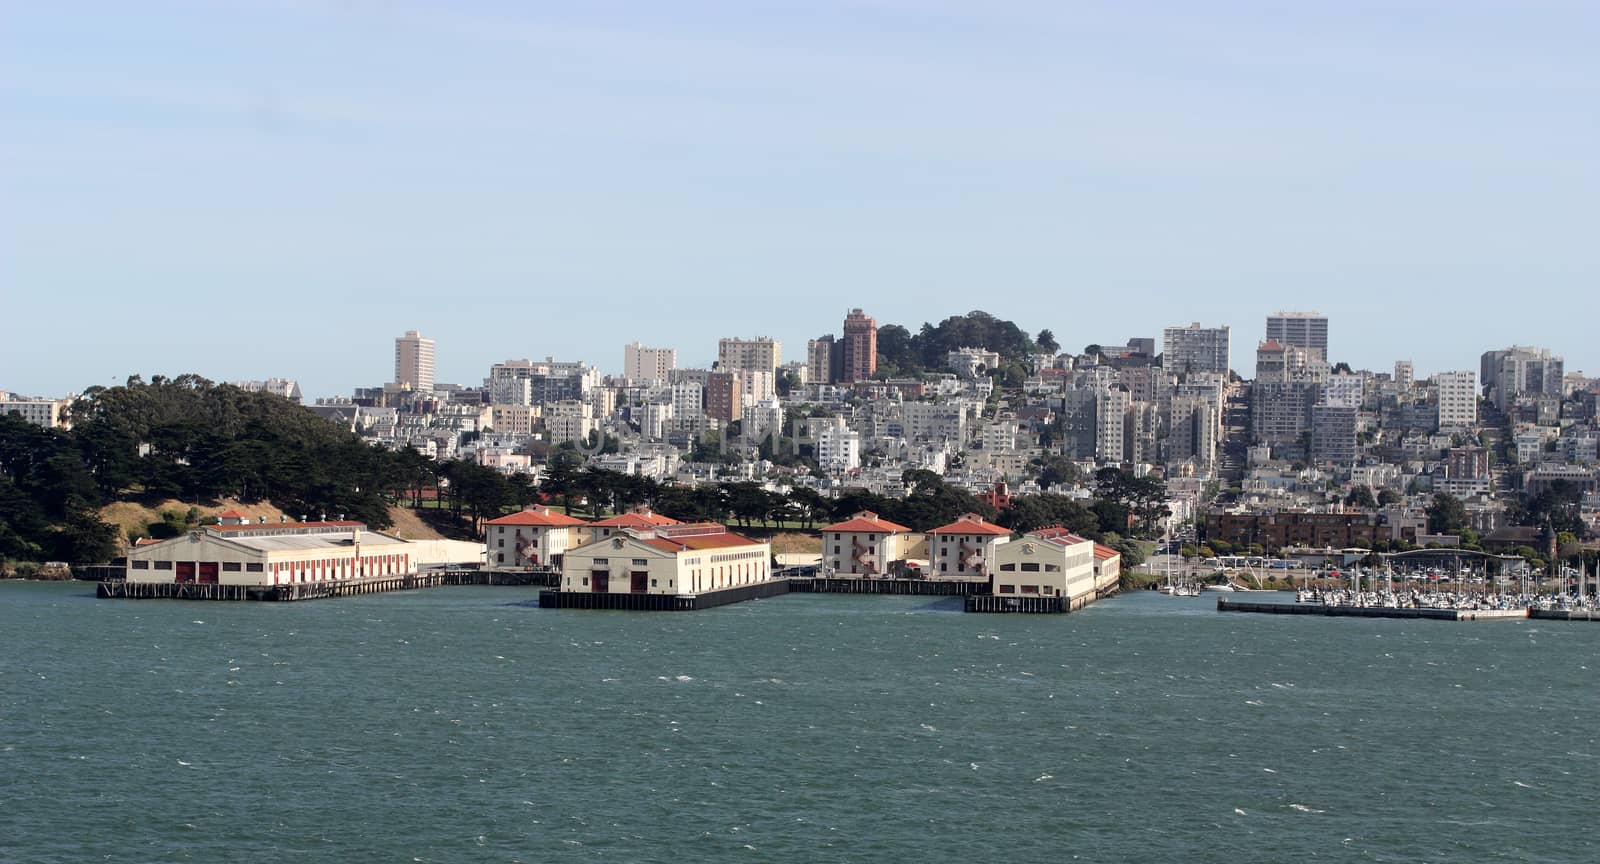 San Francisco Harbor by ziss